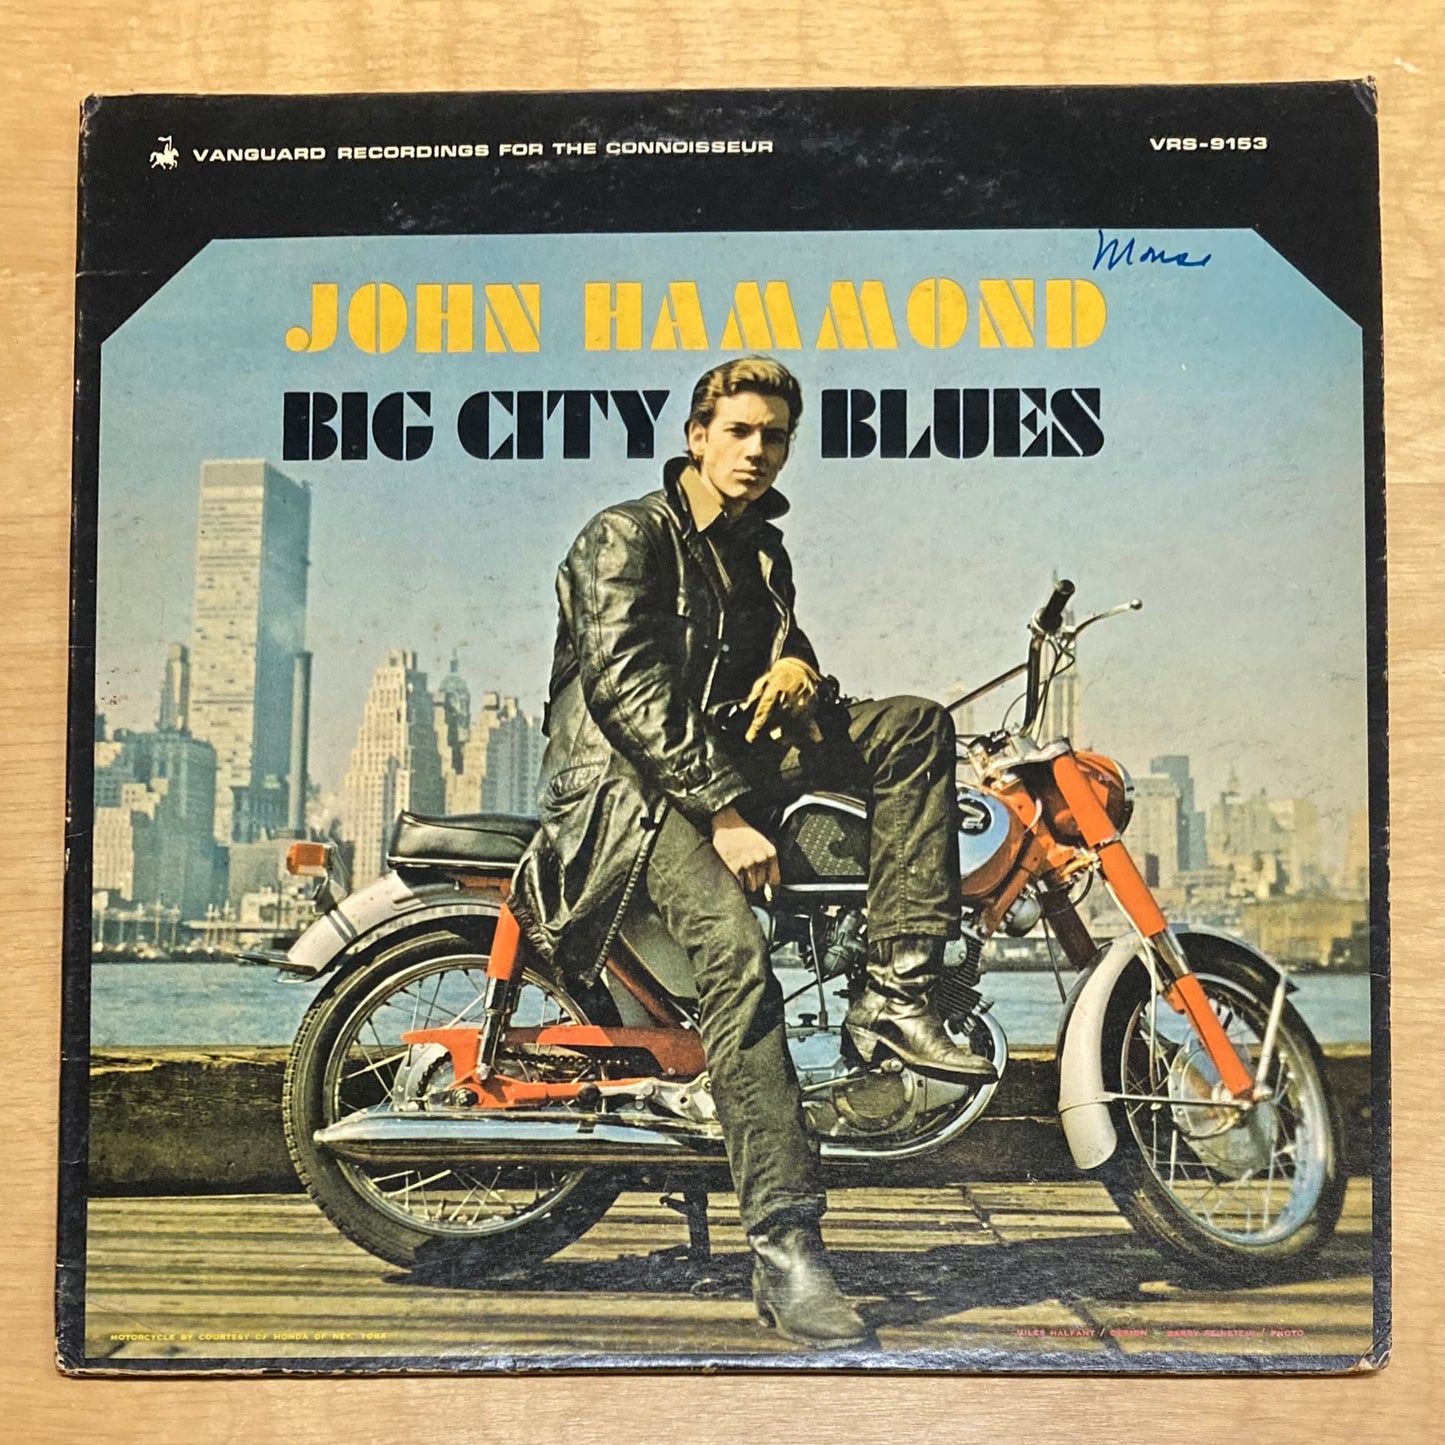 Big City Blues - John Hammond